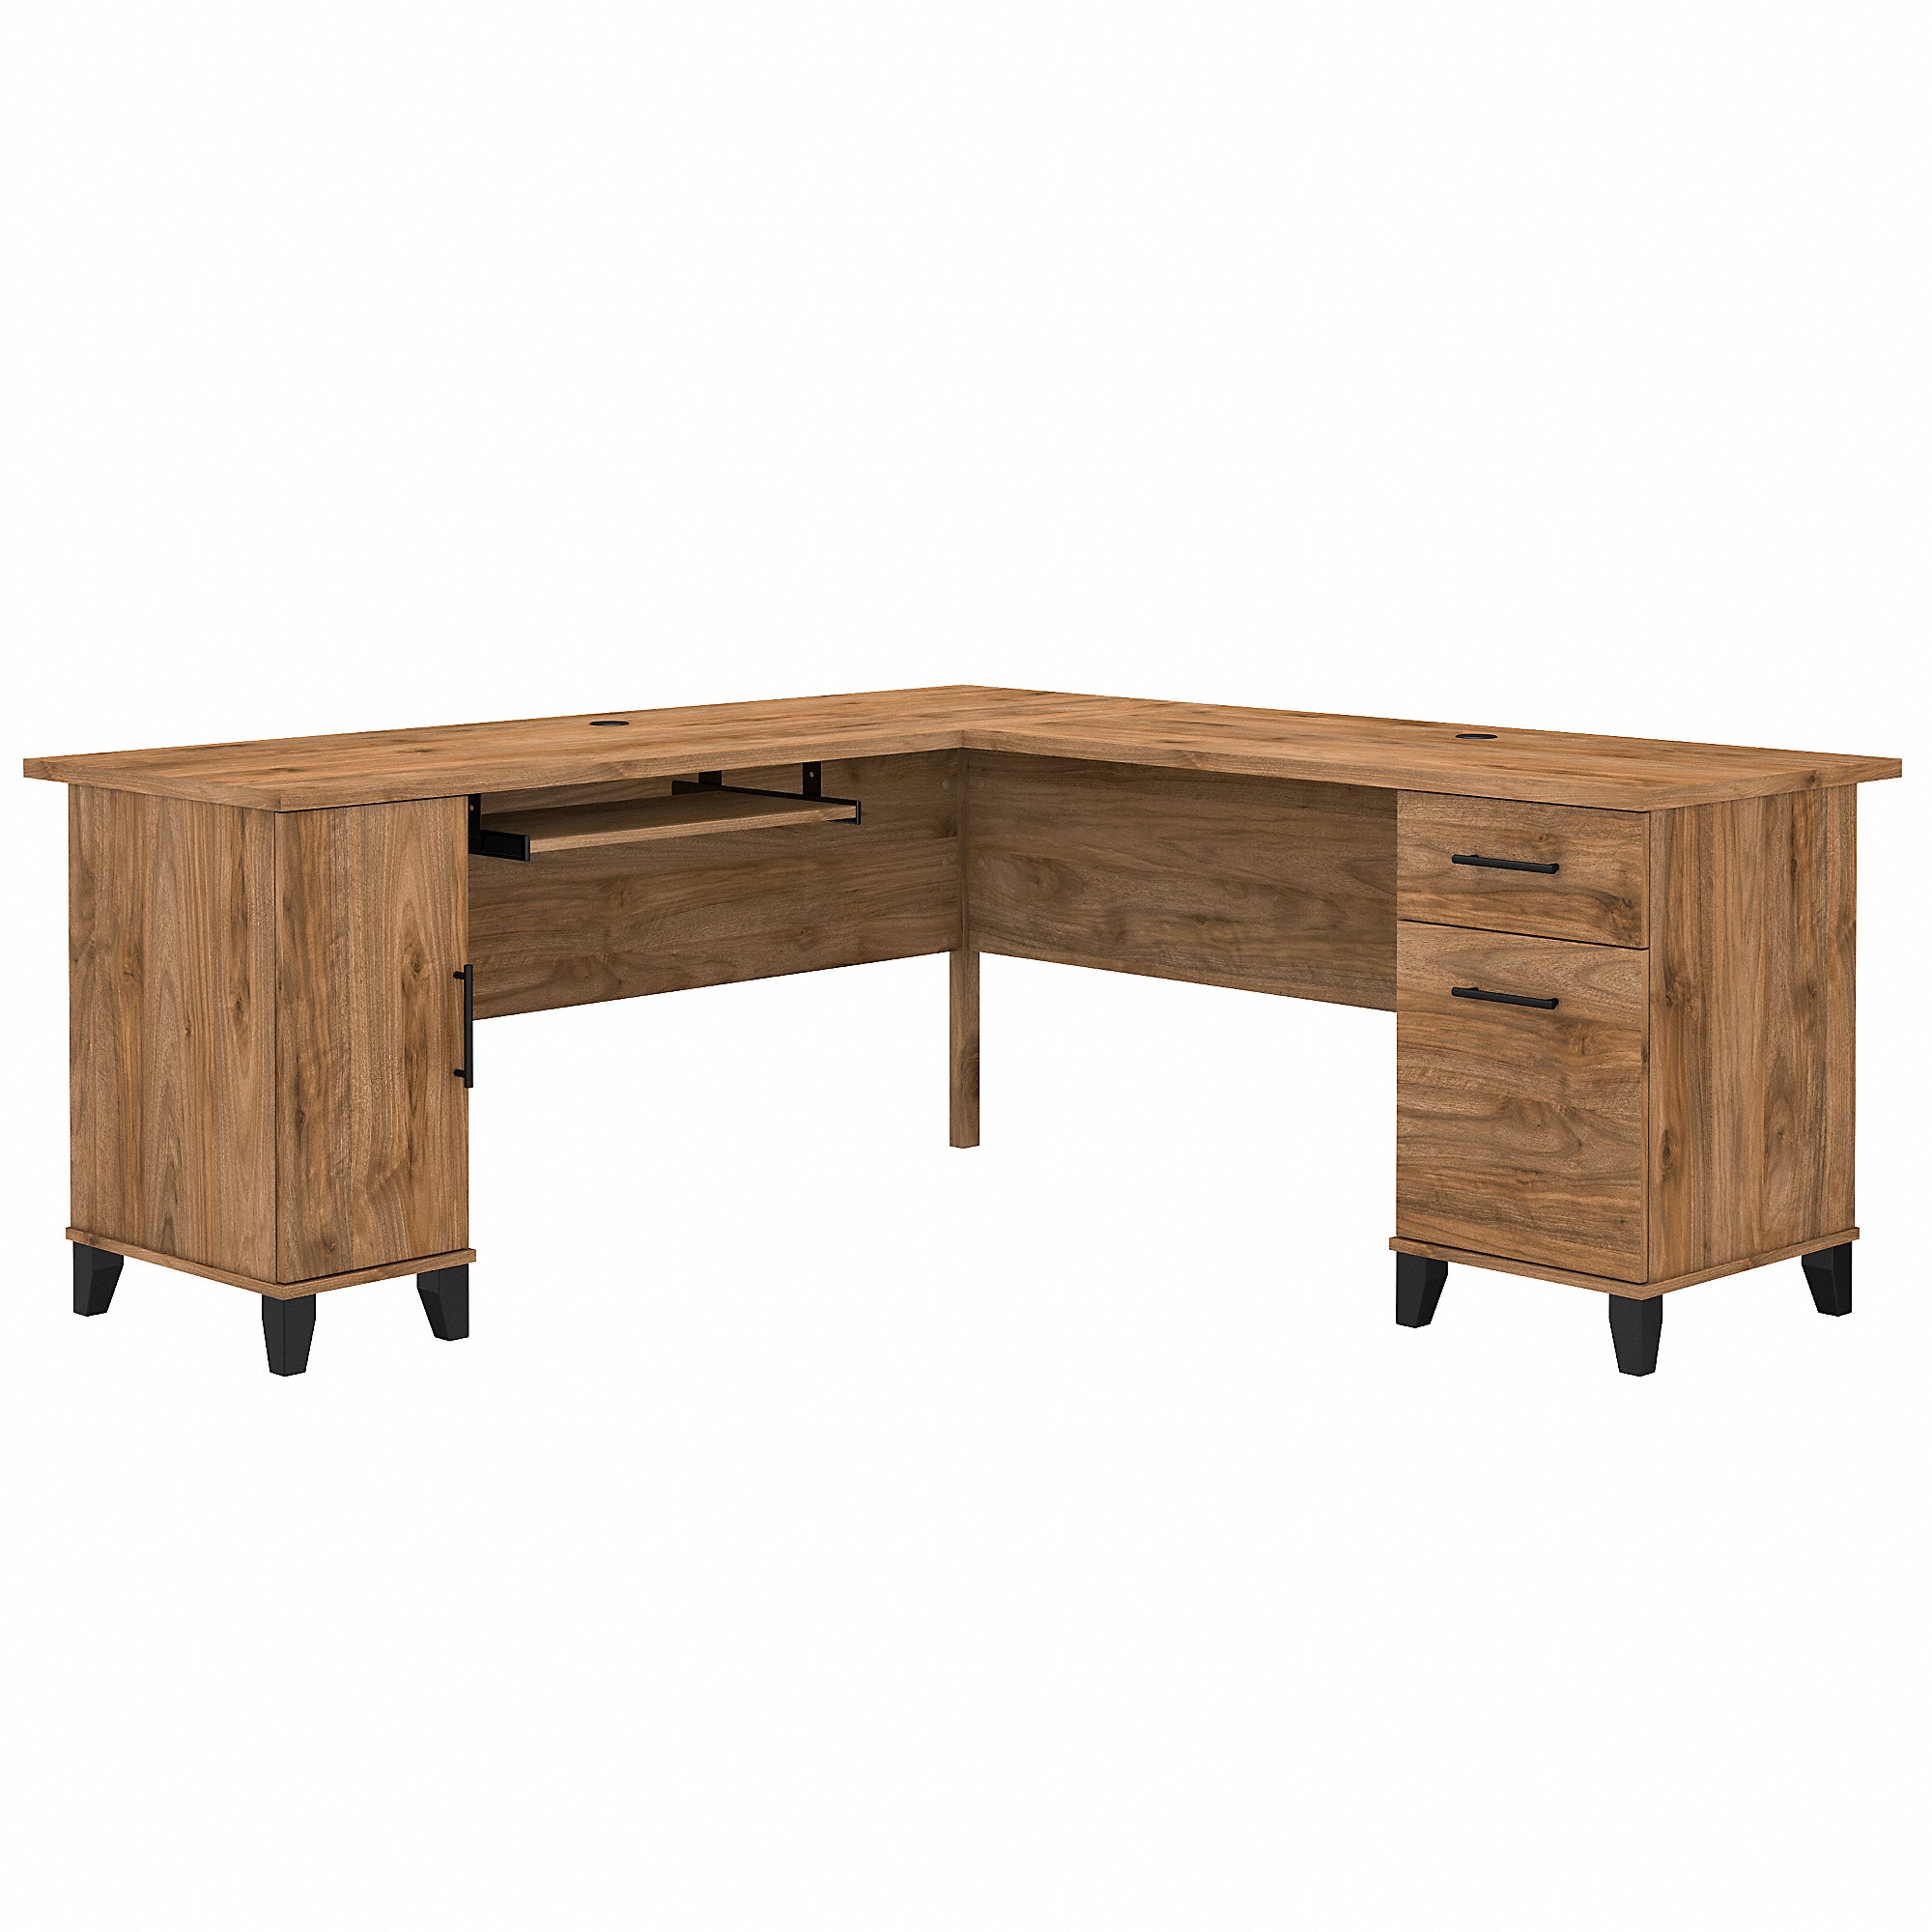 Bush Furniture Somerset 72" L Shaped Desk with Storage, Fresh Walnut - image 1 of 9